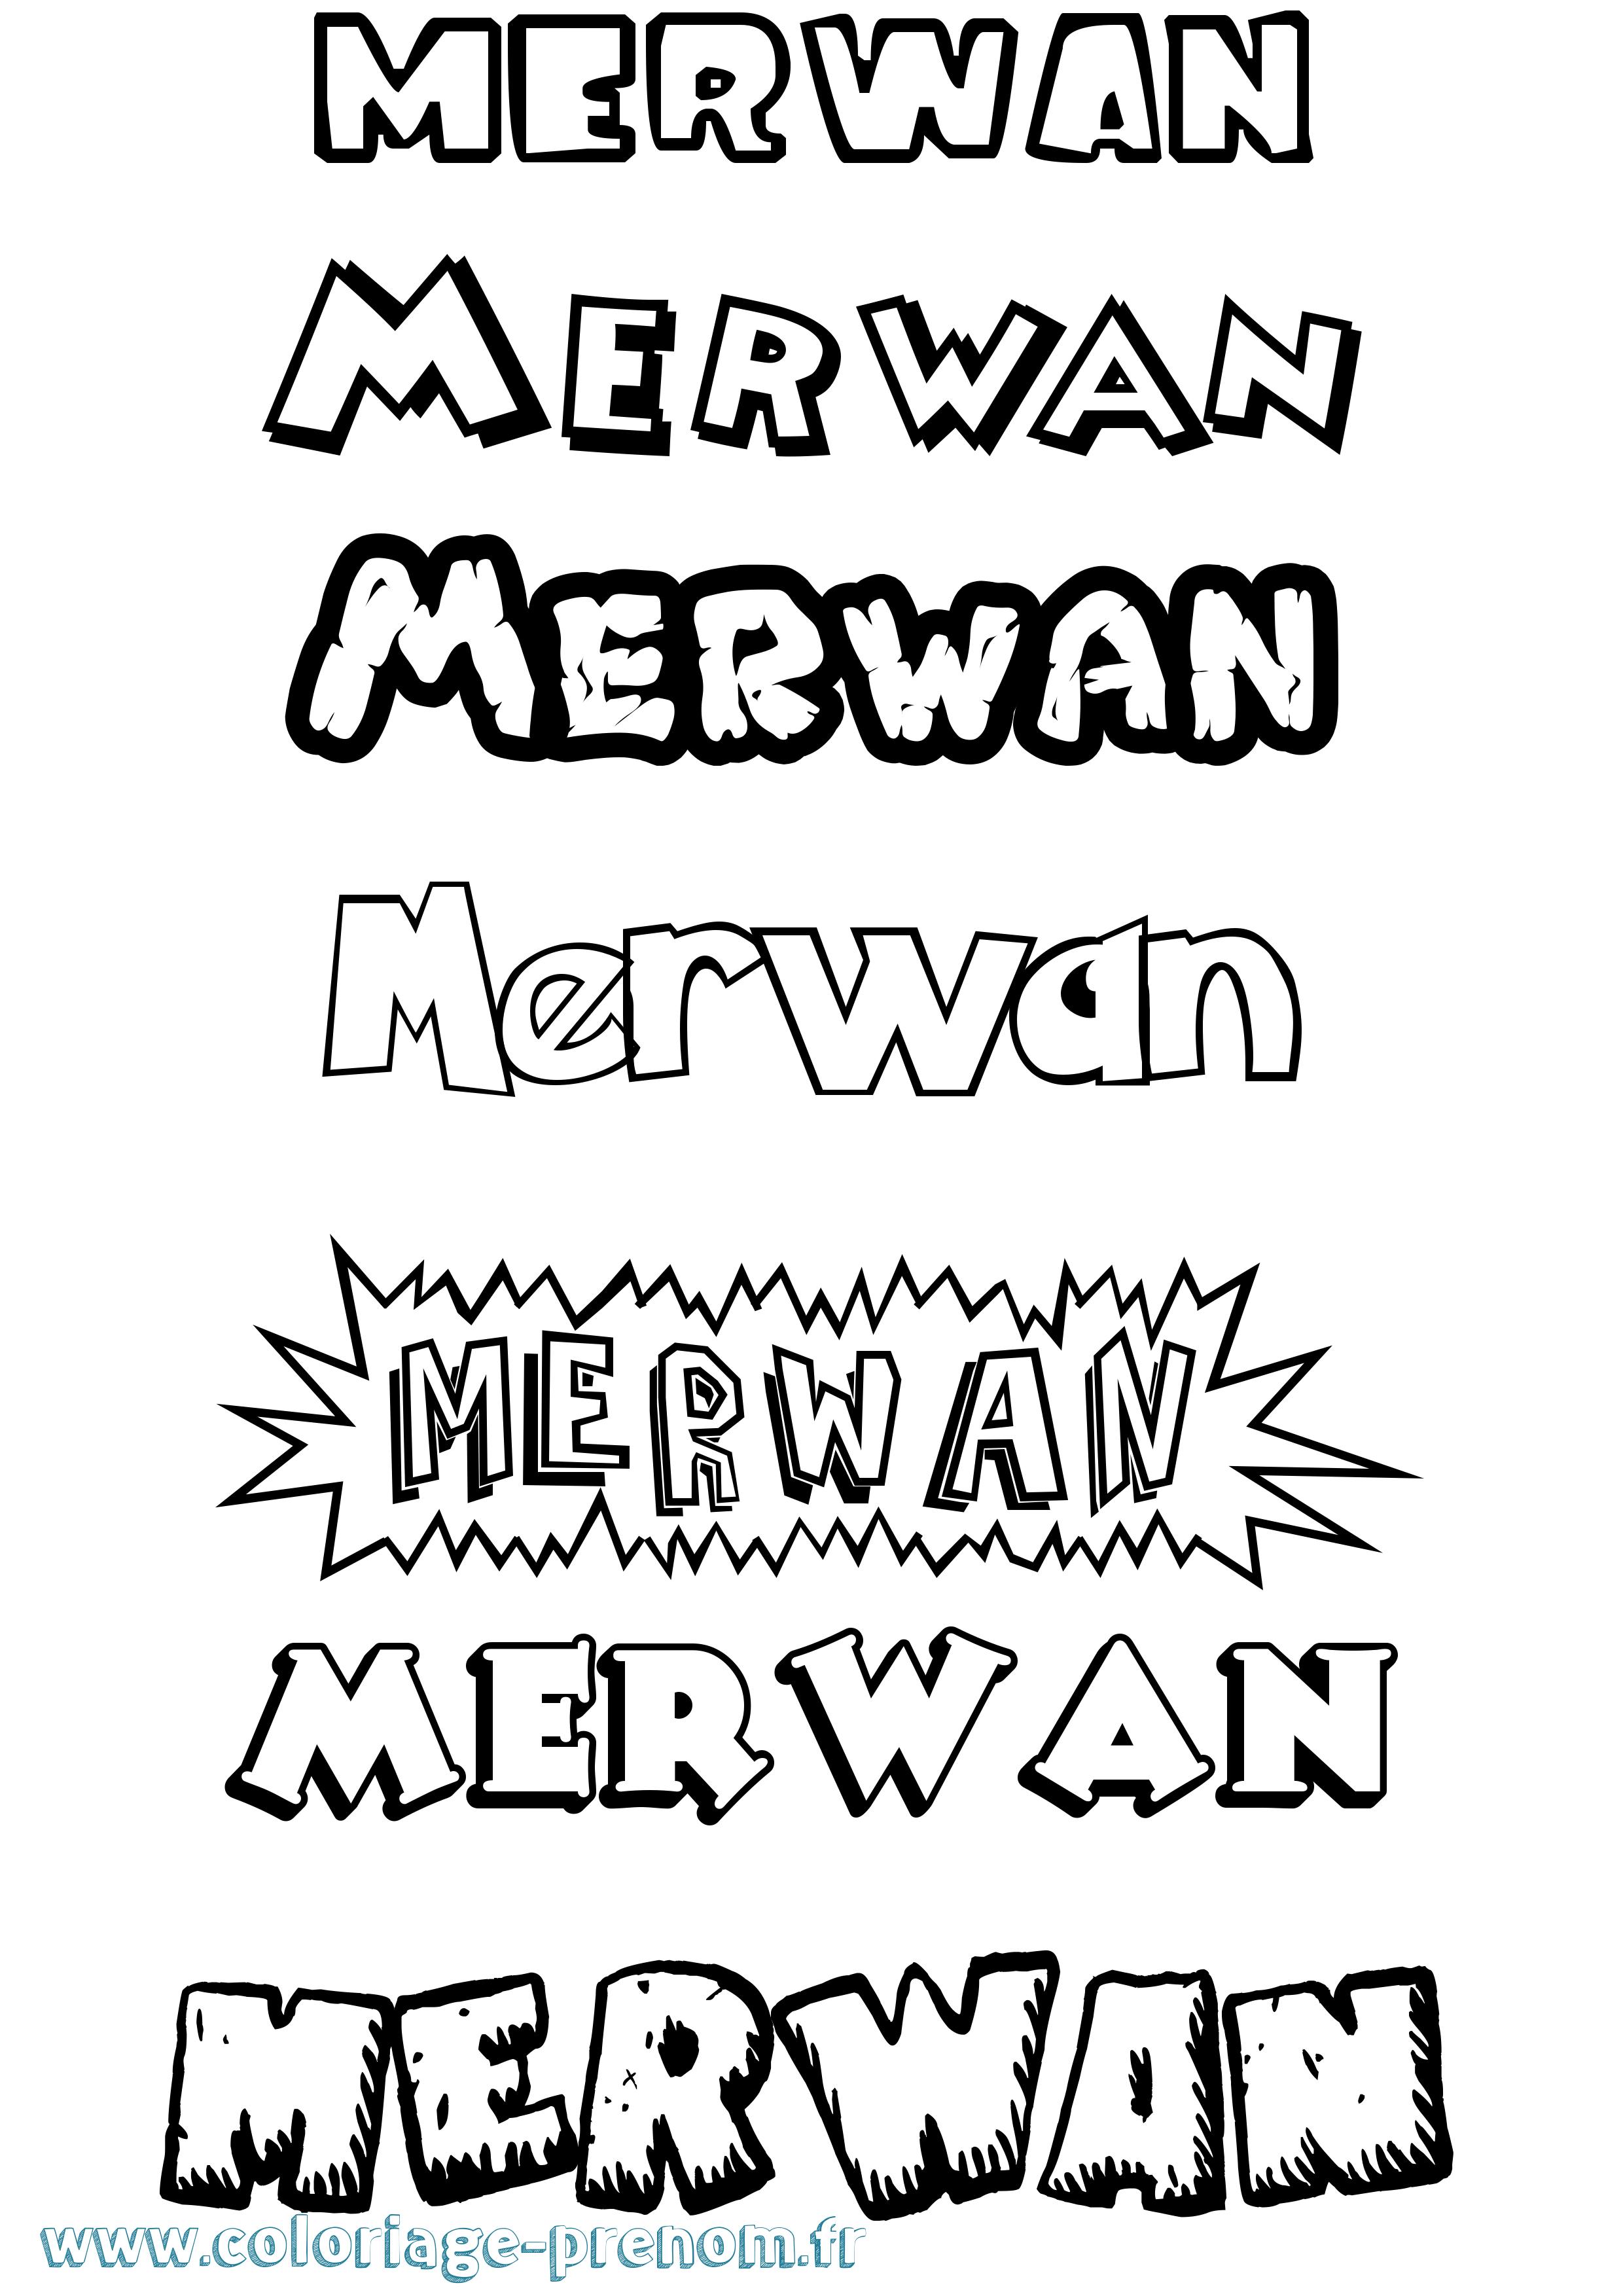 Coloriage prénom Merwan